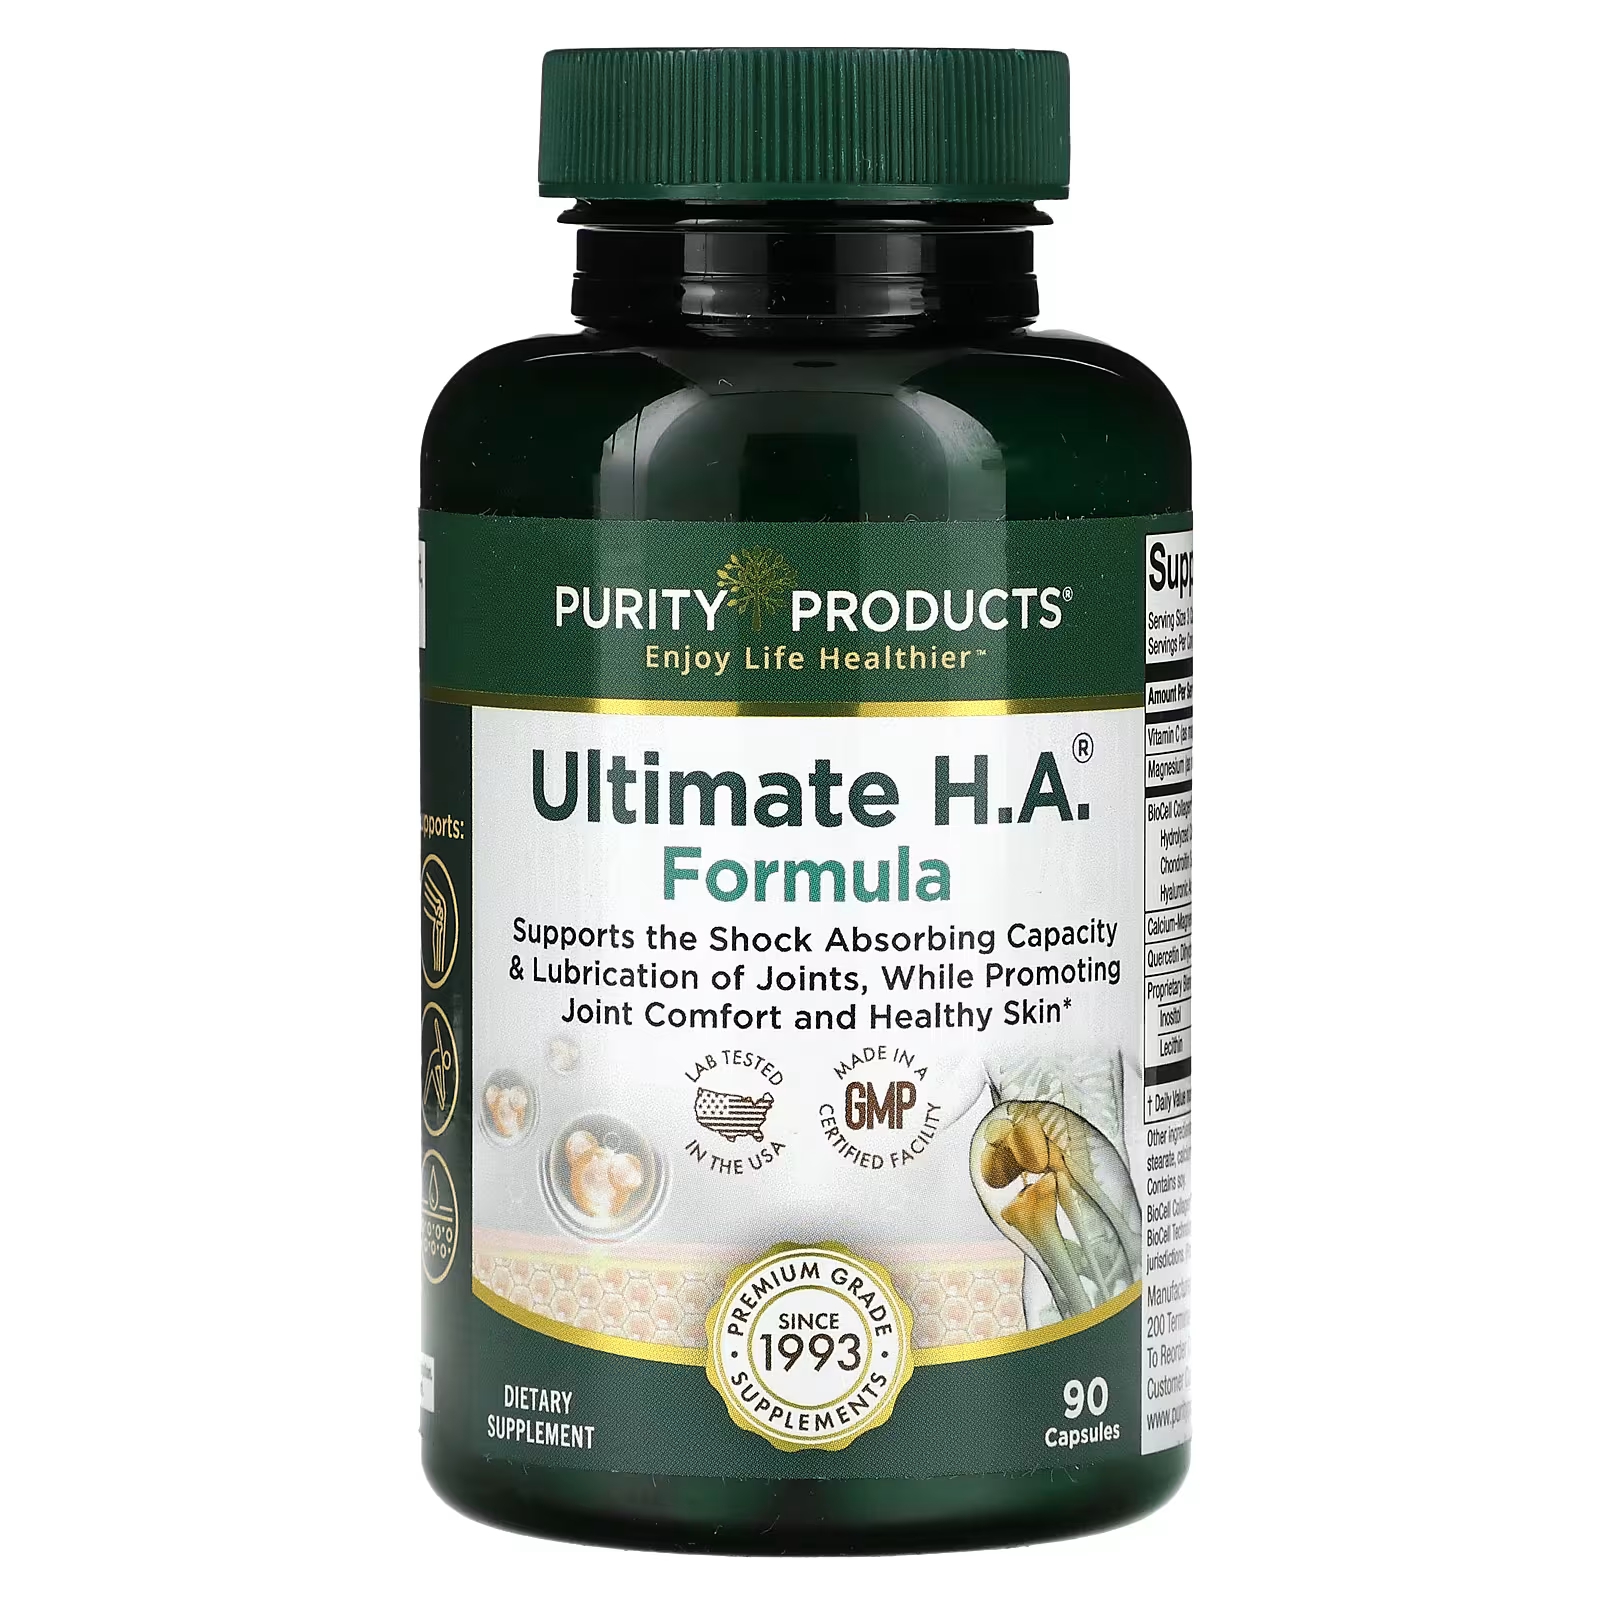 Пищевая добавка Purity Products Ultimate HA Formula, 90 капсул purity products формула h a joint 90 капсул